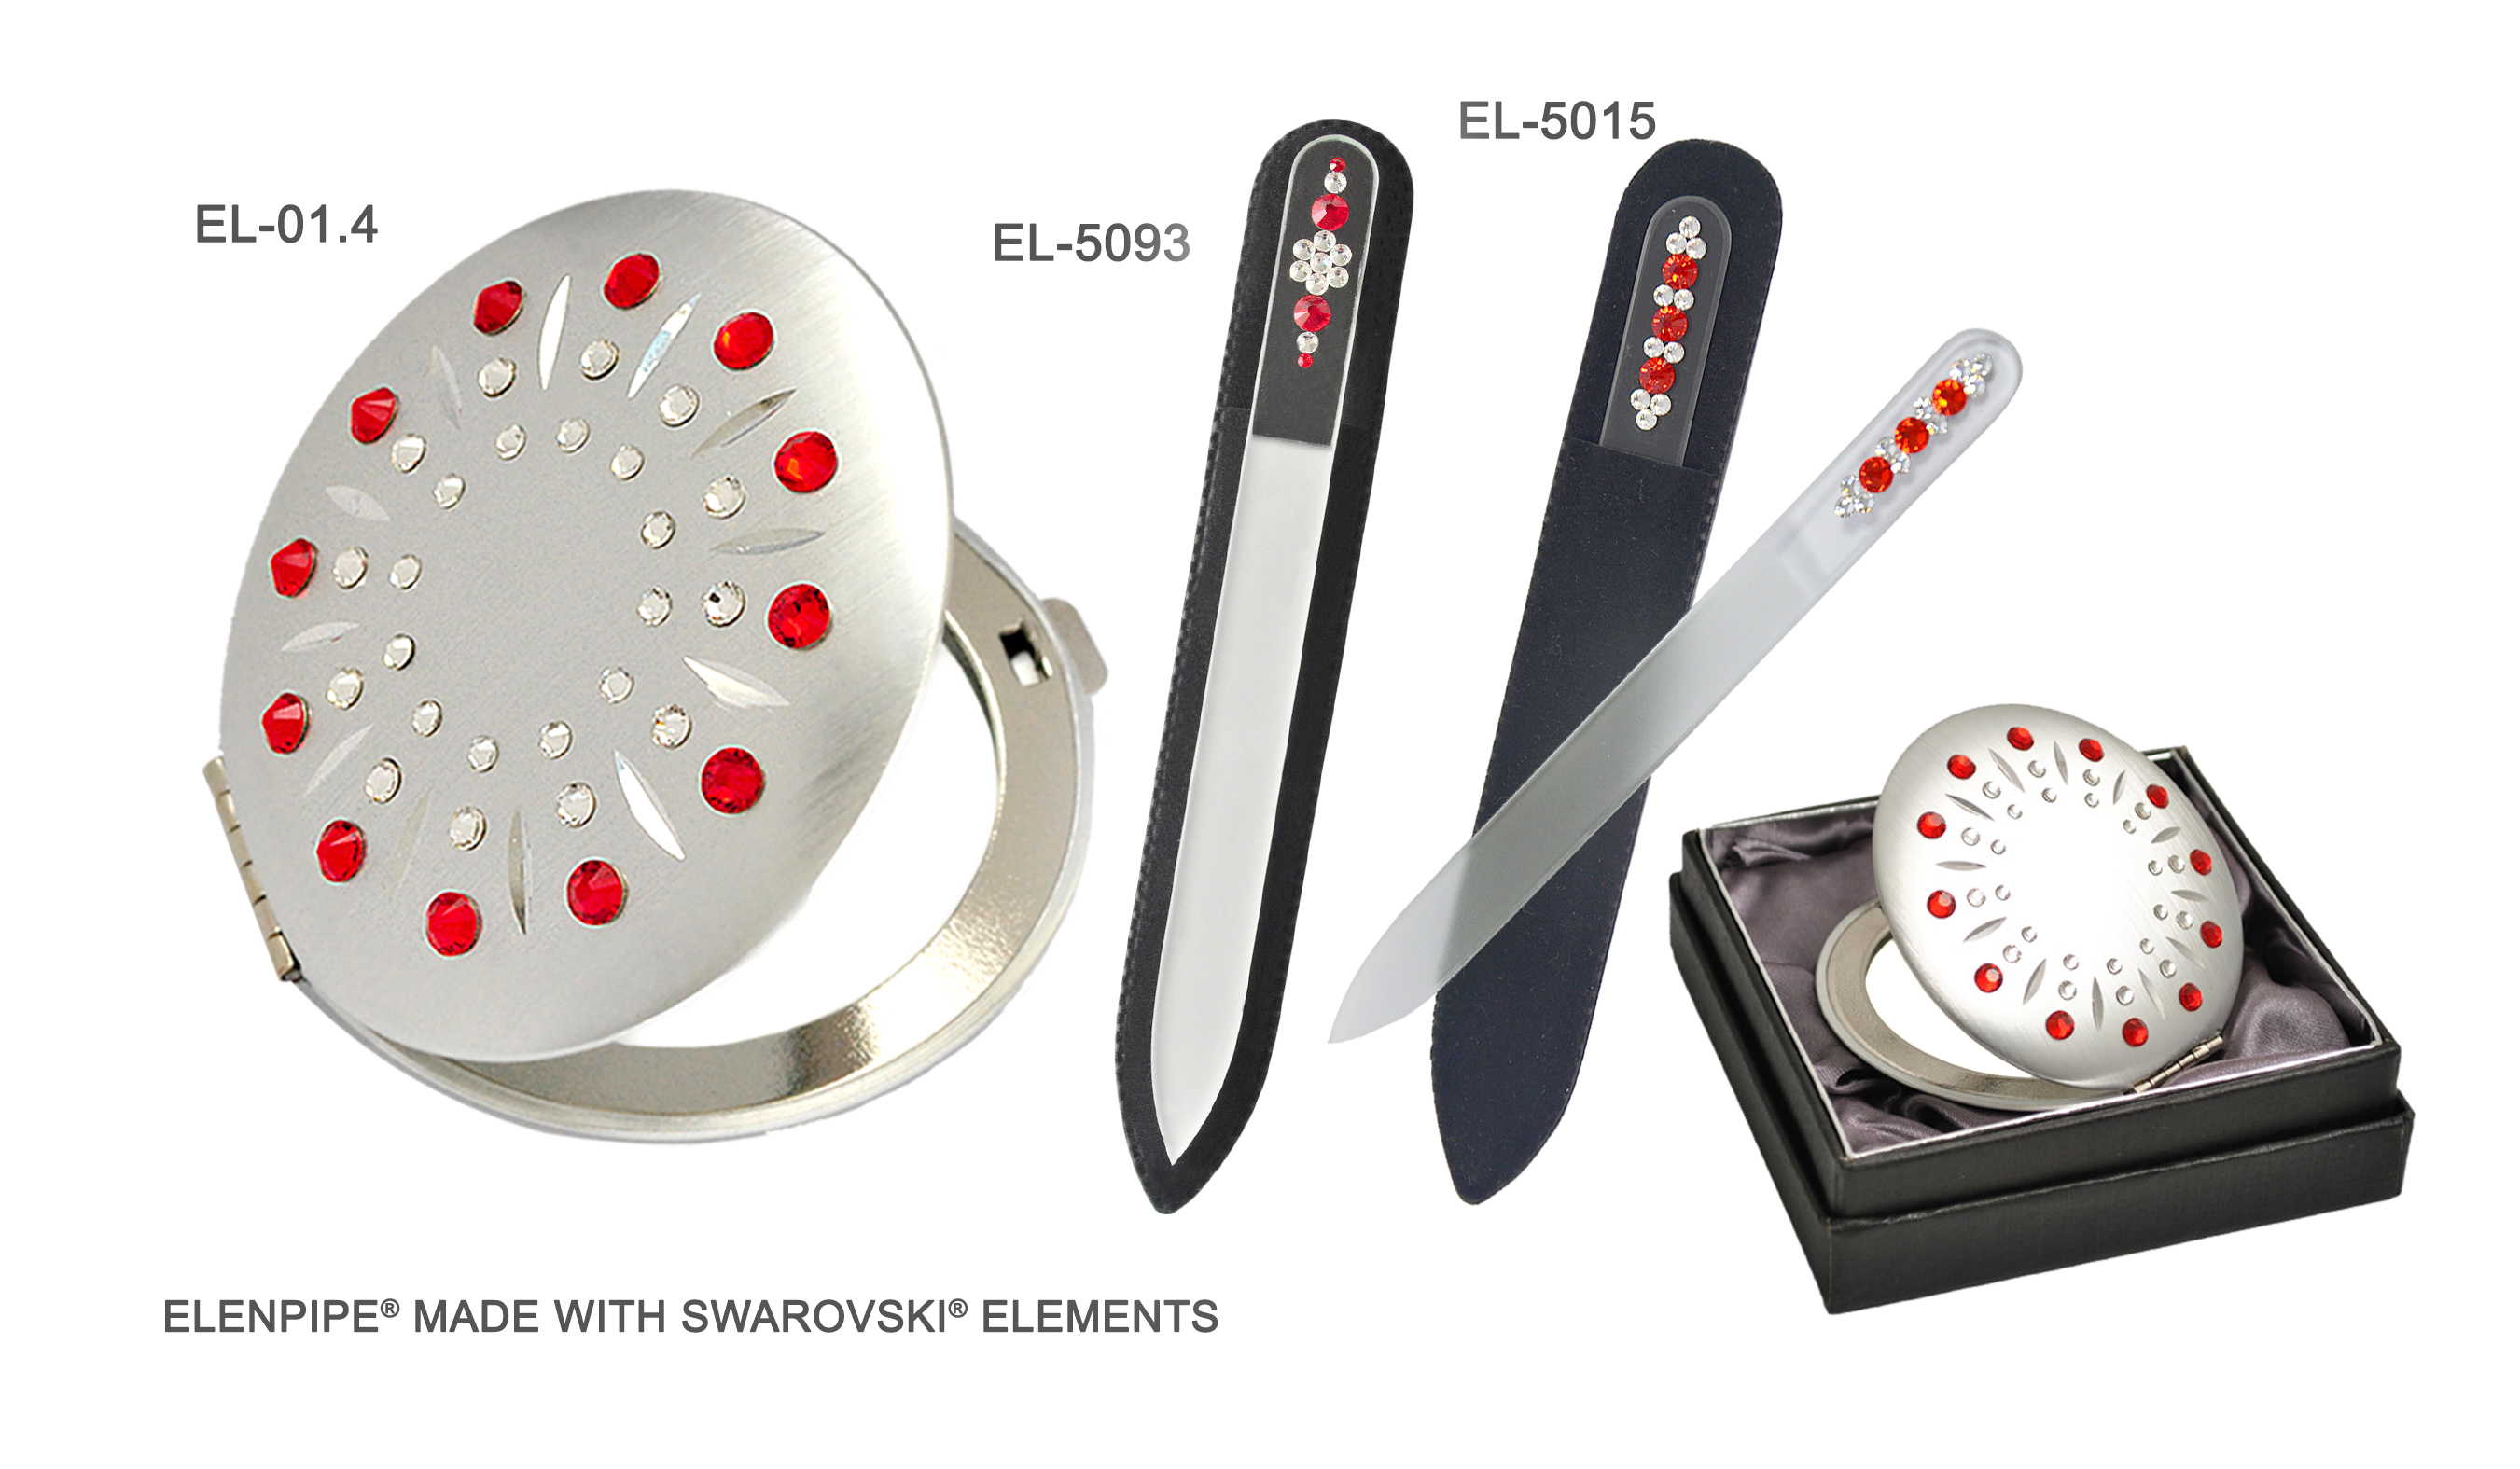 Komplet lusterko EL-01.4 Red Sun + pilnik czerwony EL-5015 albo EL-5093 Swarovski® crystals kosmetyczne